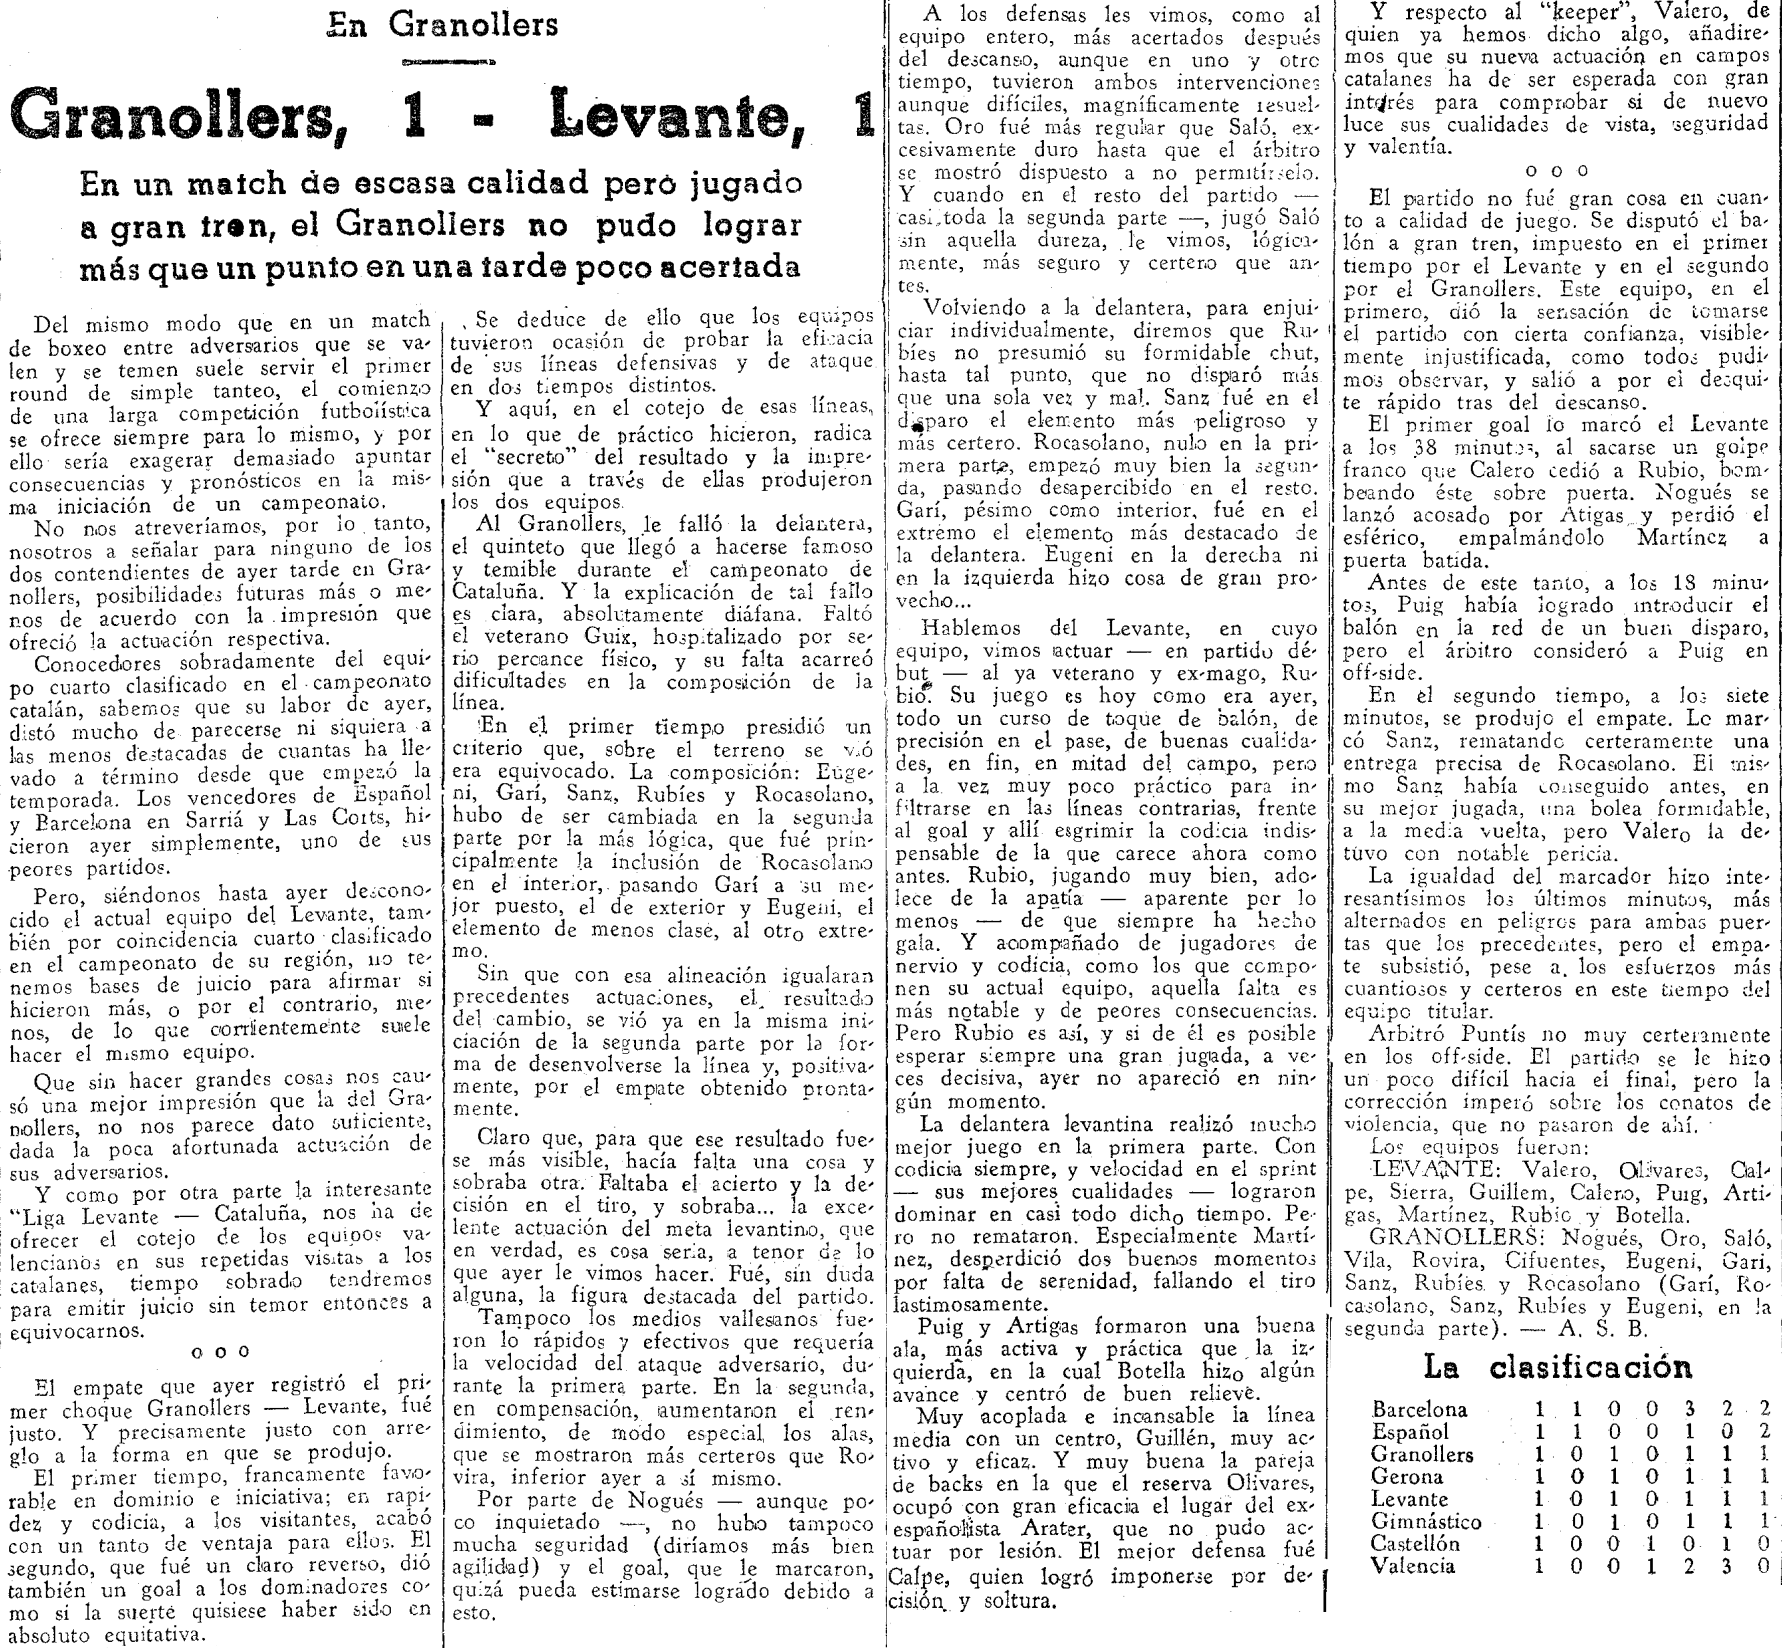 1937.01.31 (31 января 1937), Гранольерс - Леванте, 1-1.png